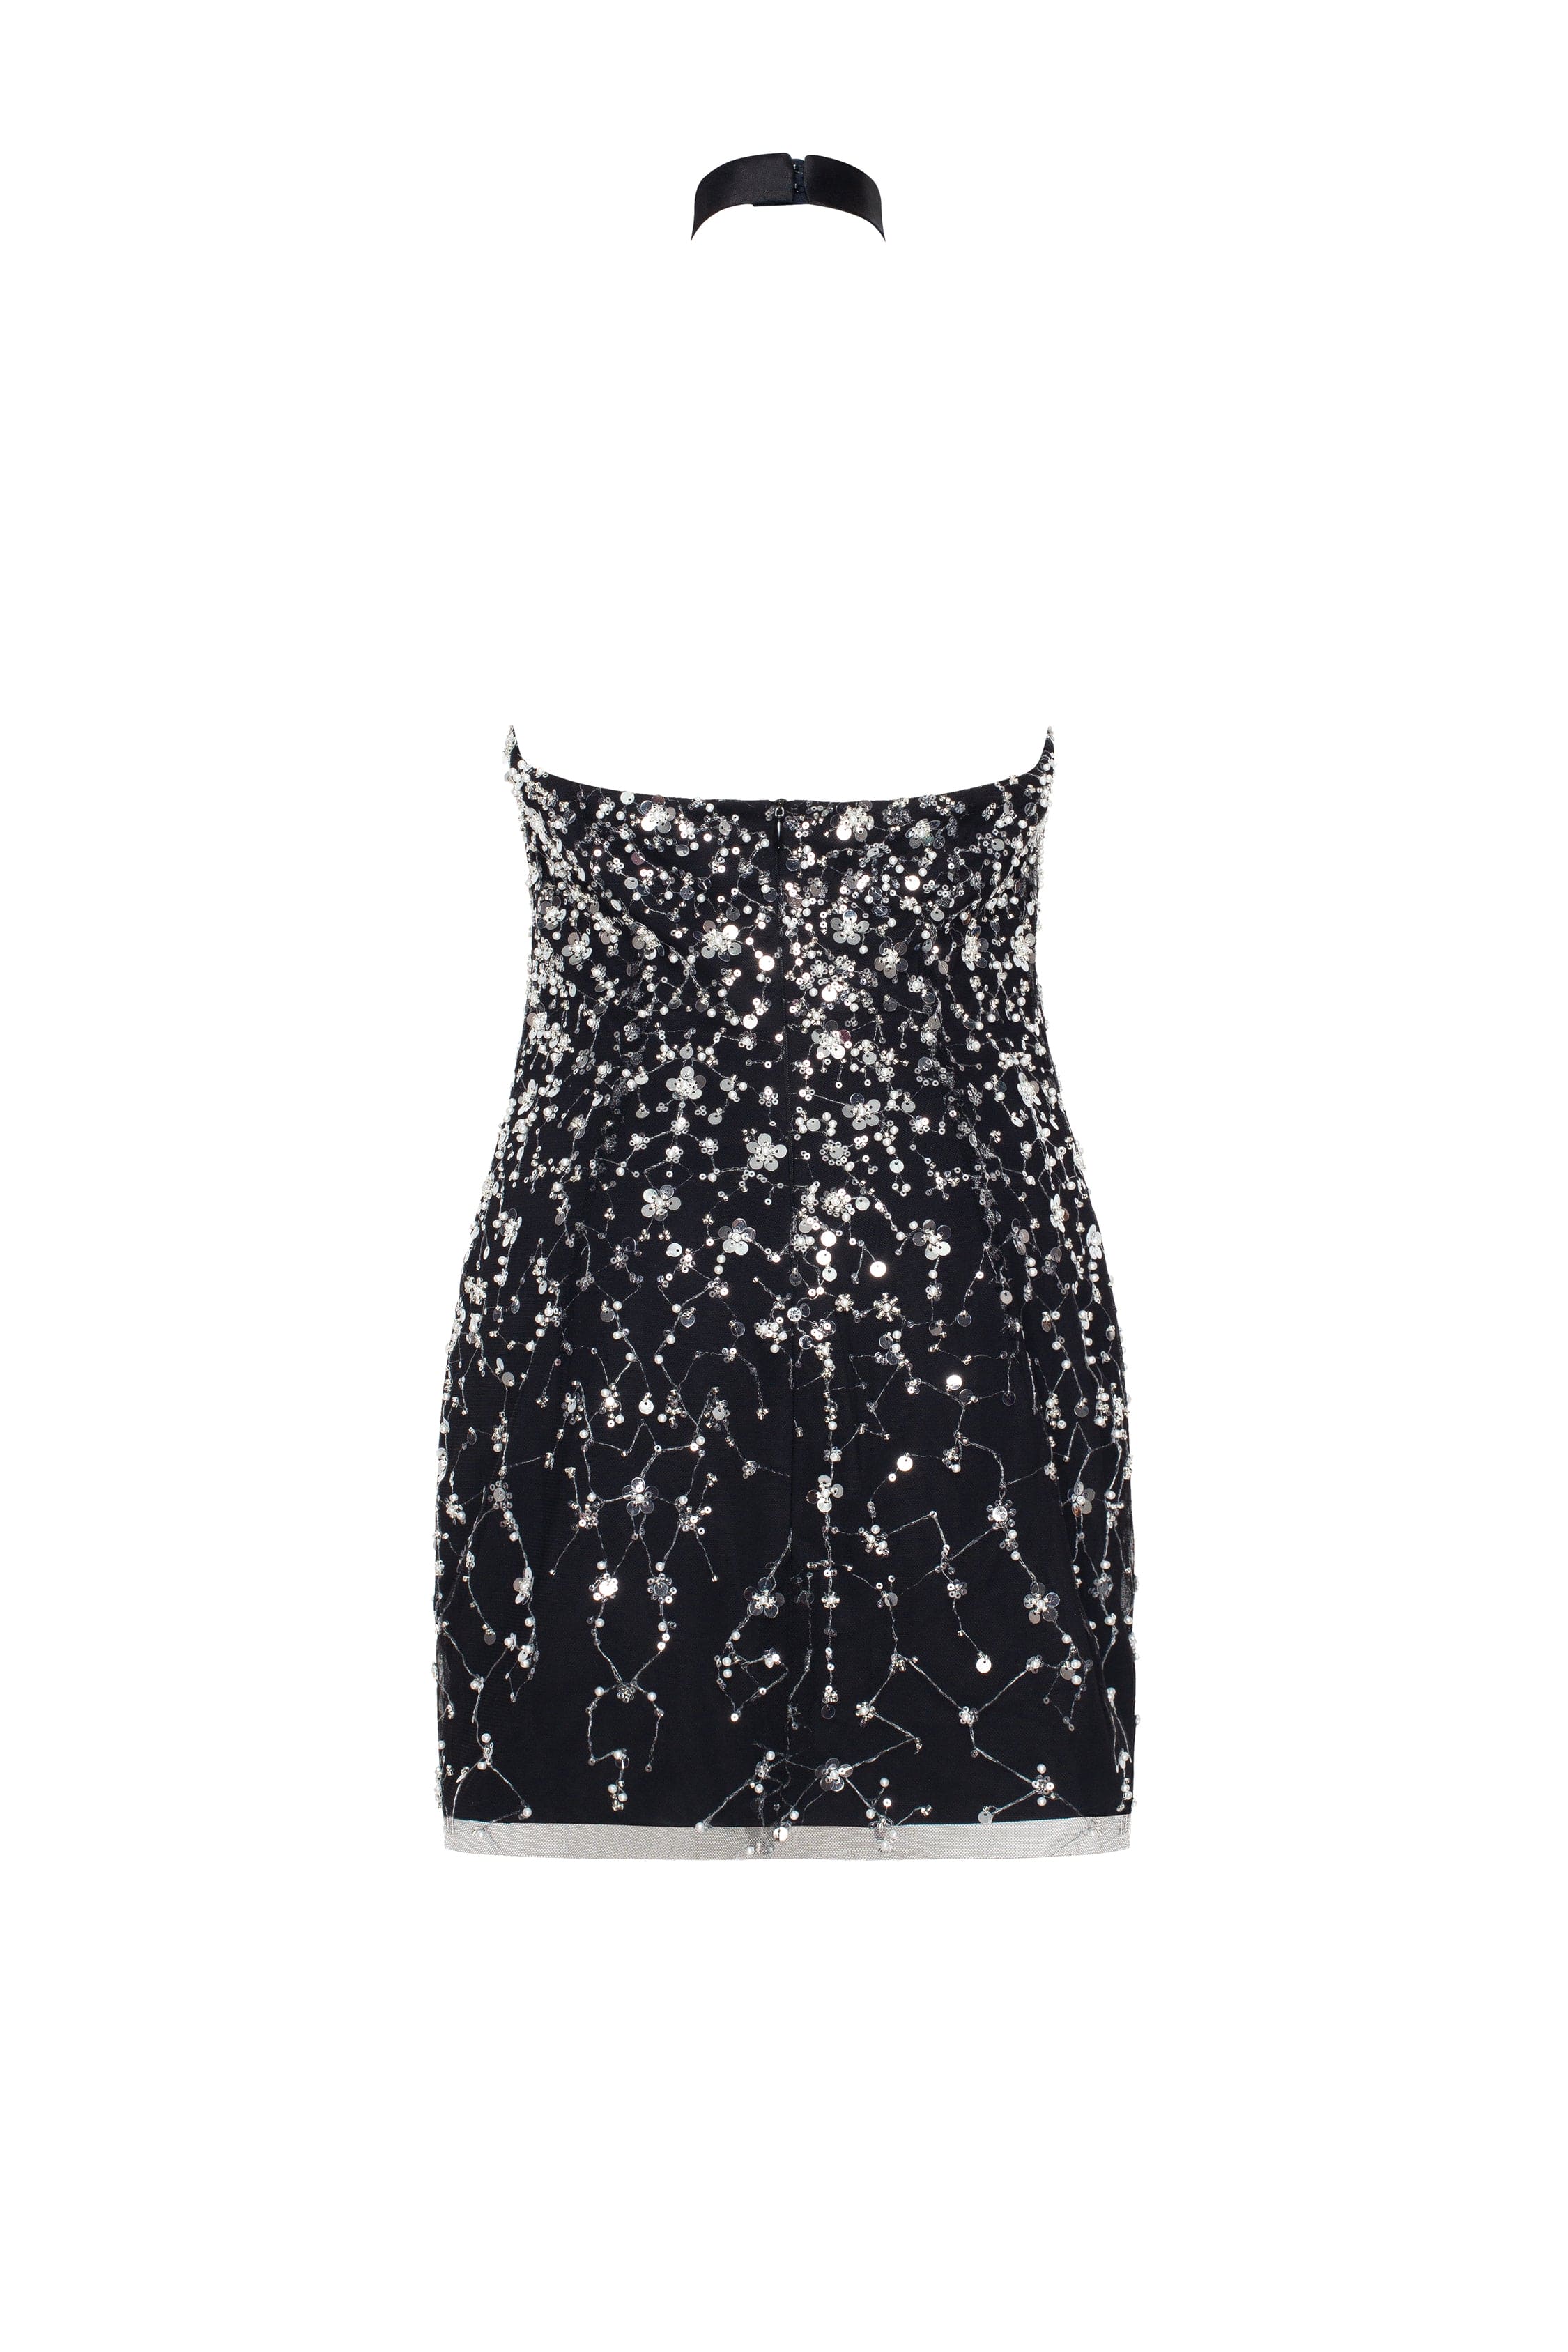 Striking halterneck crystal-embellished mini dress, Xo Xo